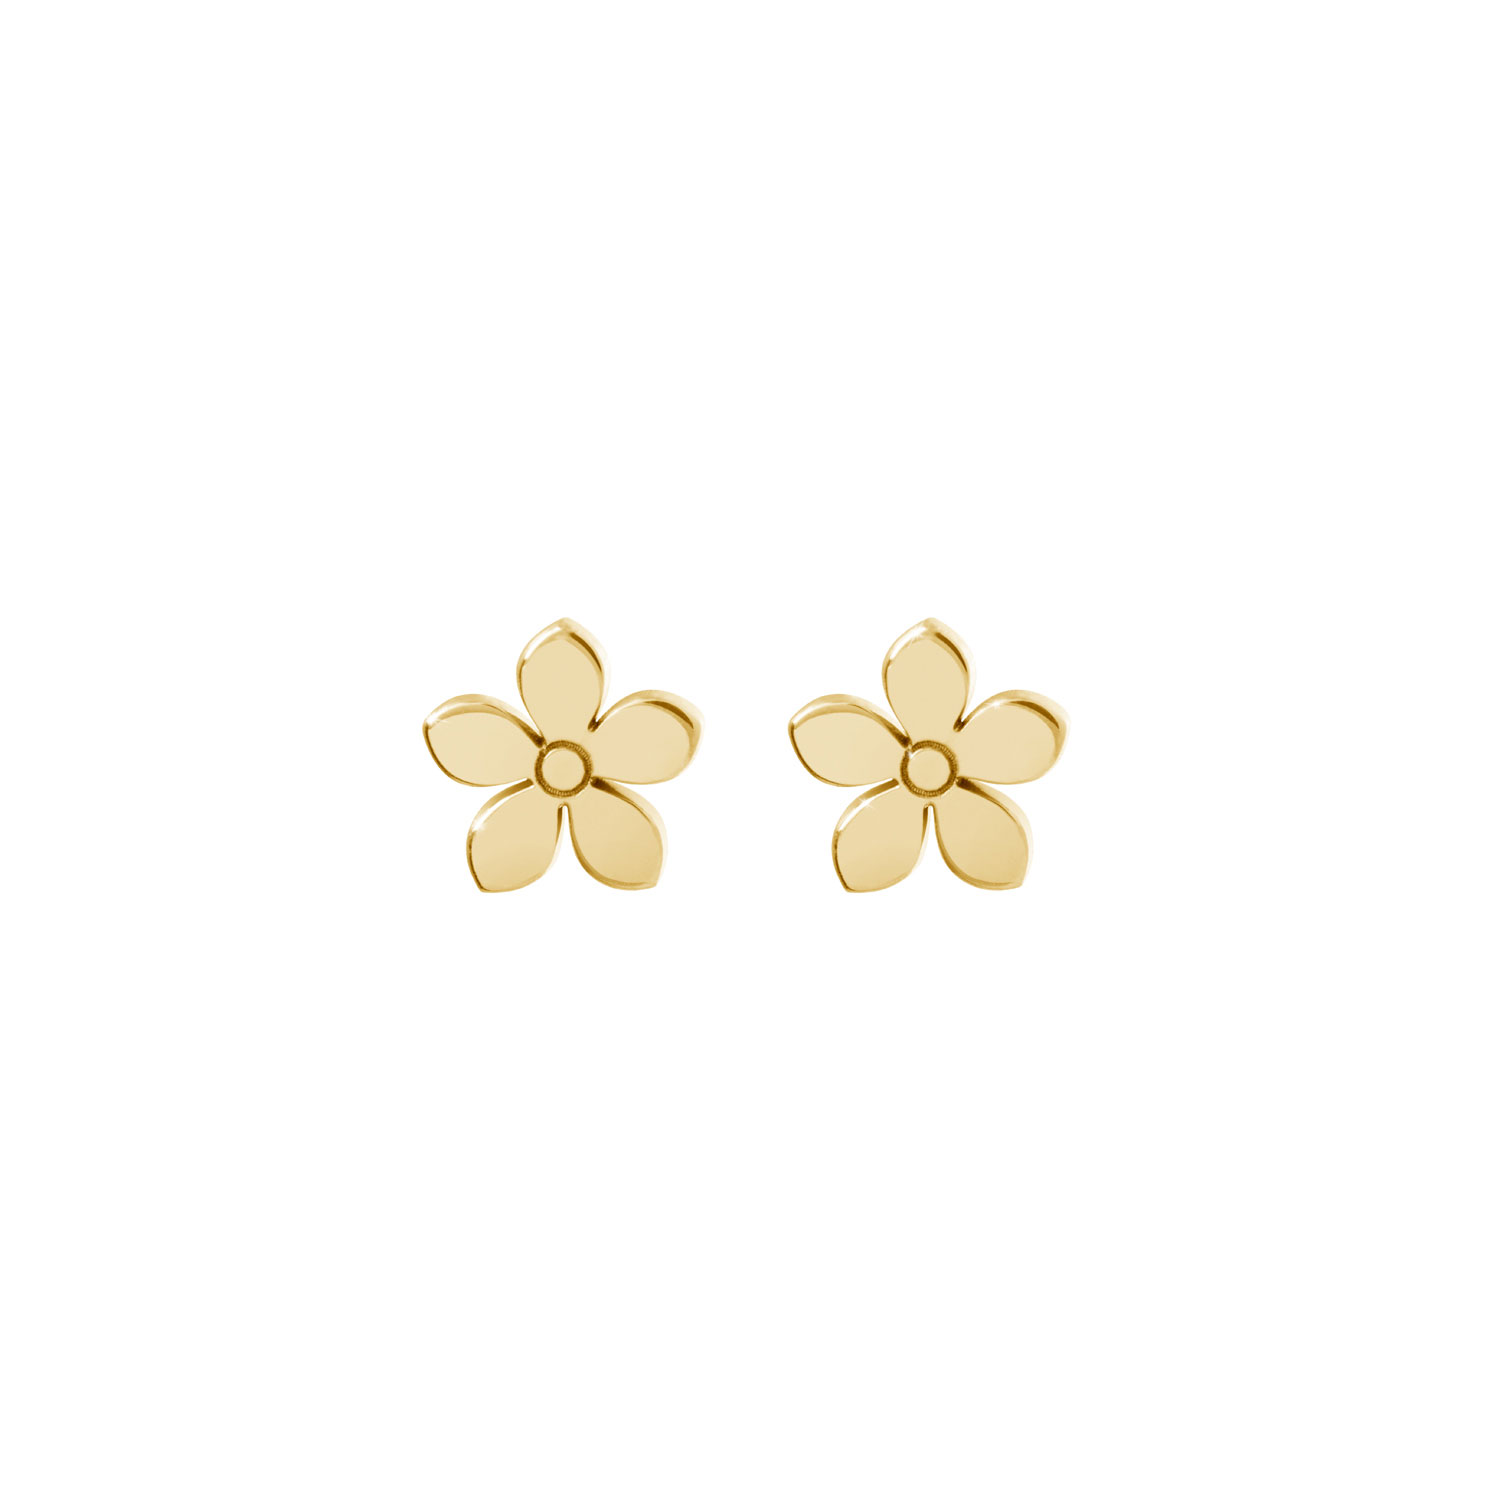 Buy quality 14K Gold Small daimond Earrings in Delhi